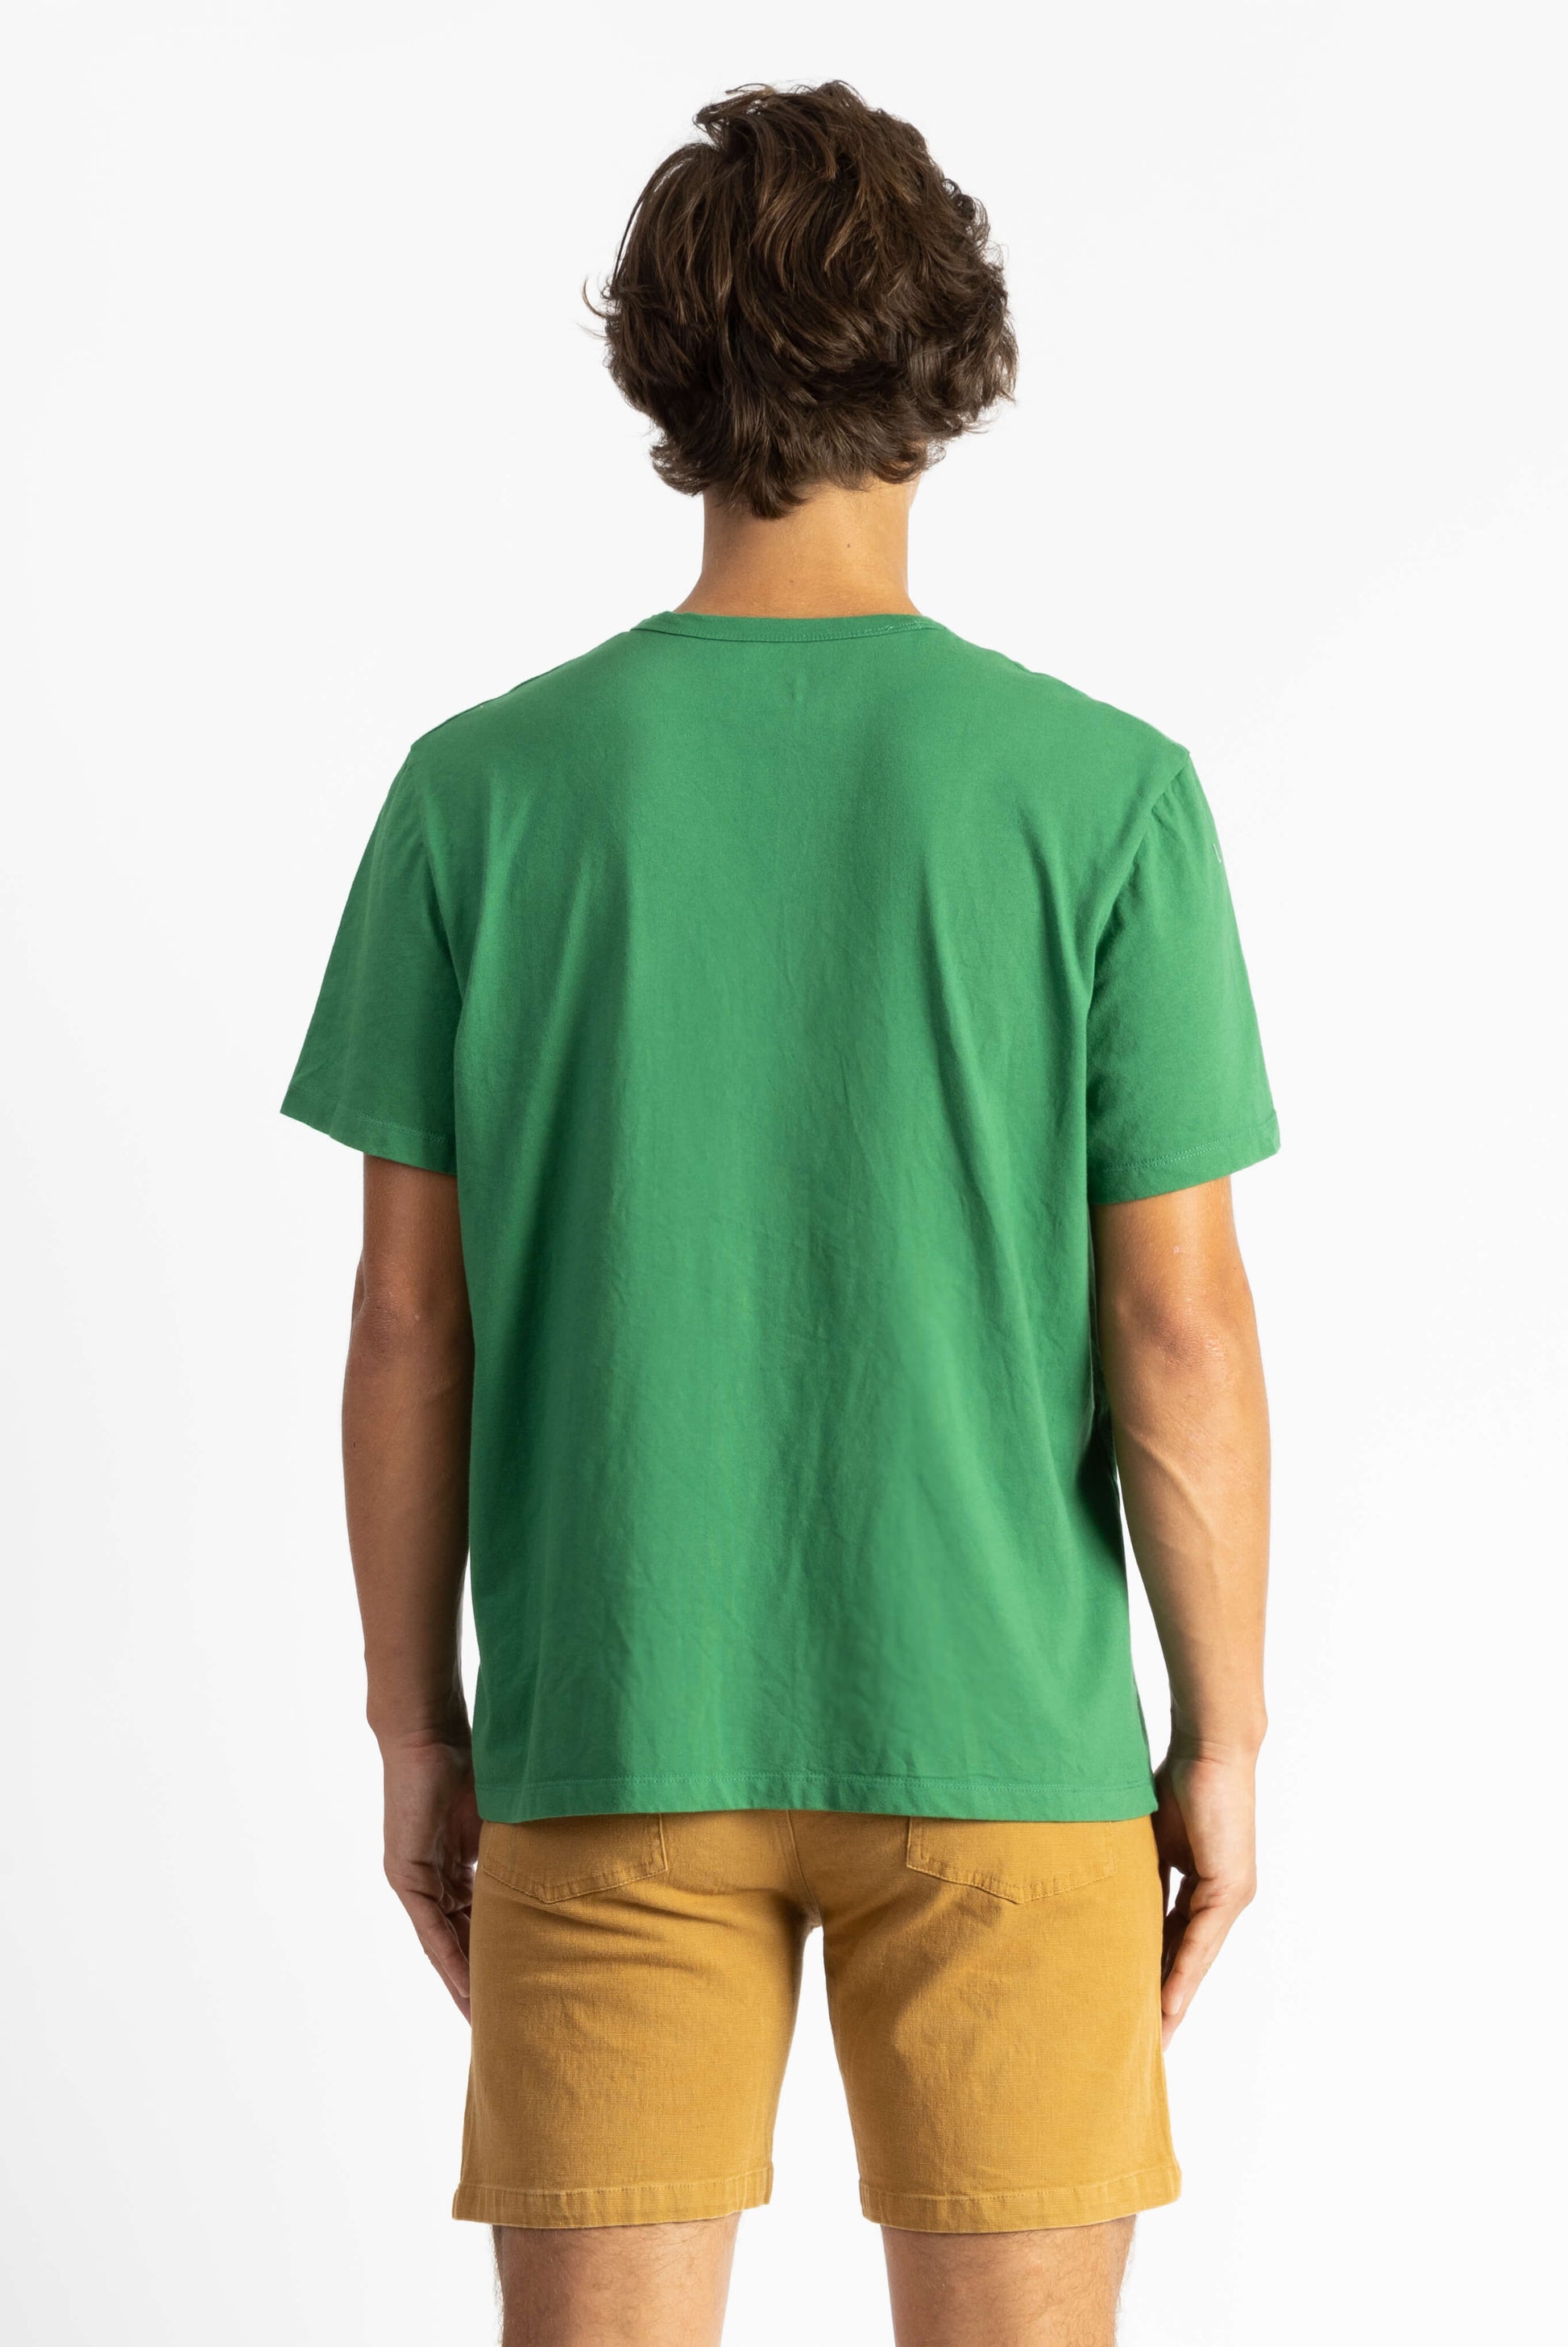 A man wearing a Green Workshop Tee Shirt having Manana branding with golden shorts